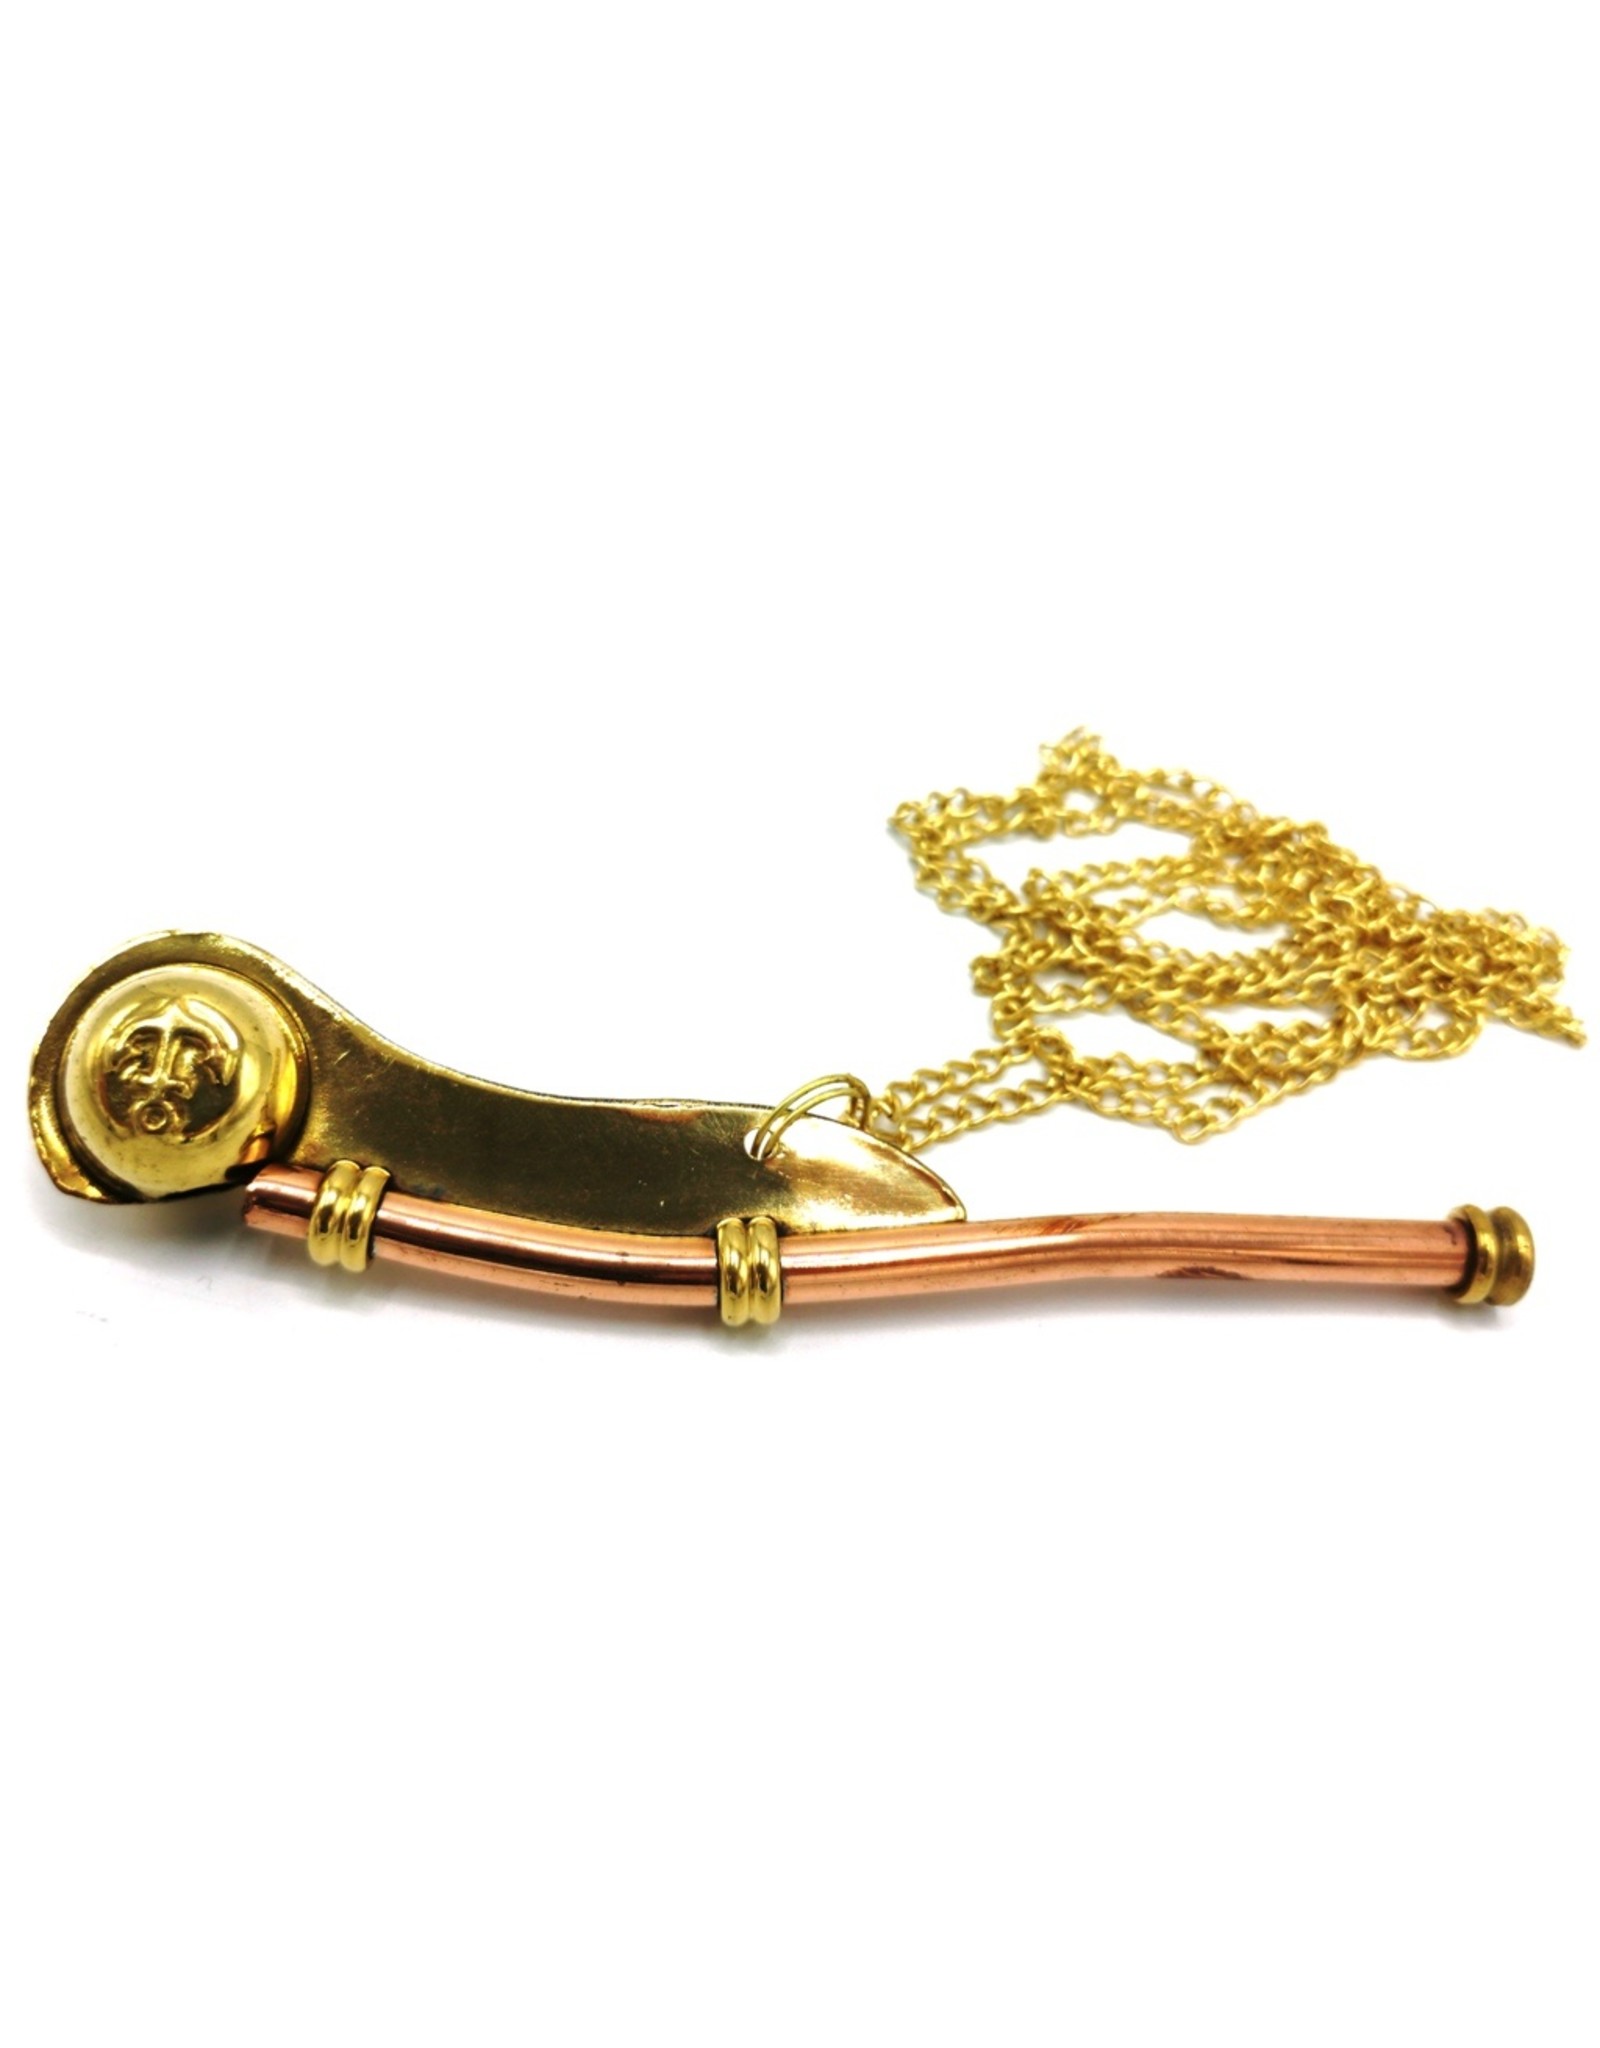 Trukado Miscellaneous - Boatswain's whistle (brass)